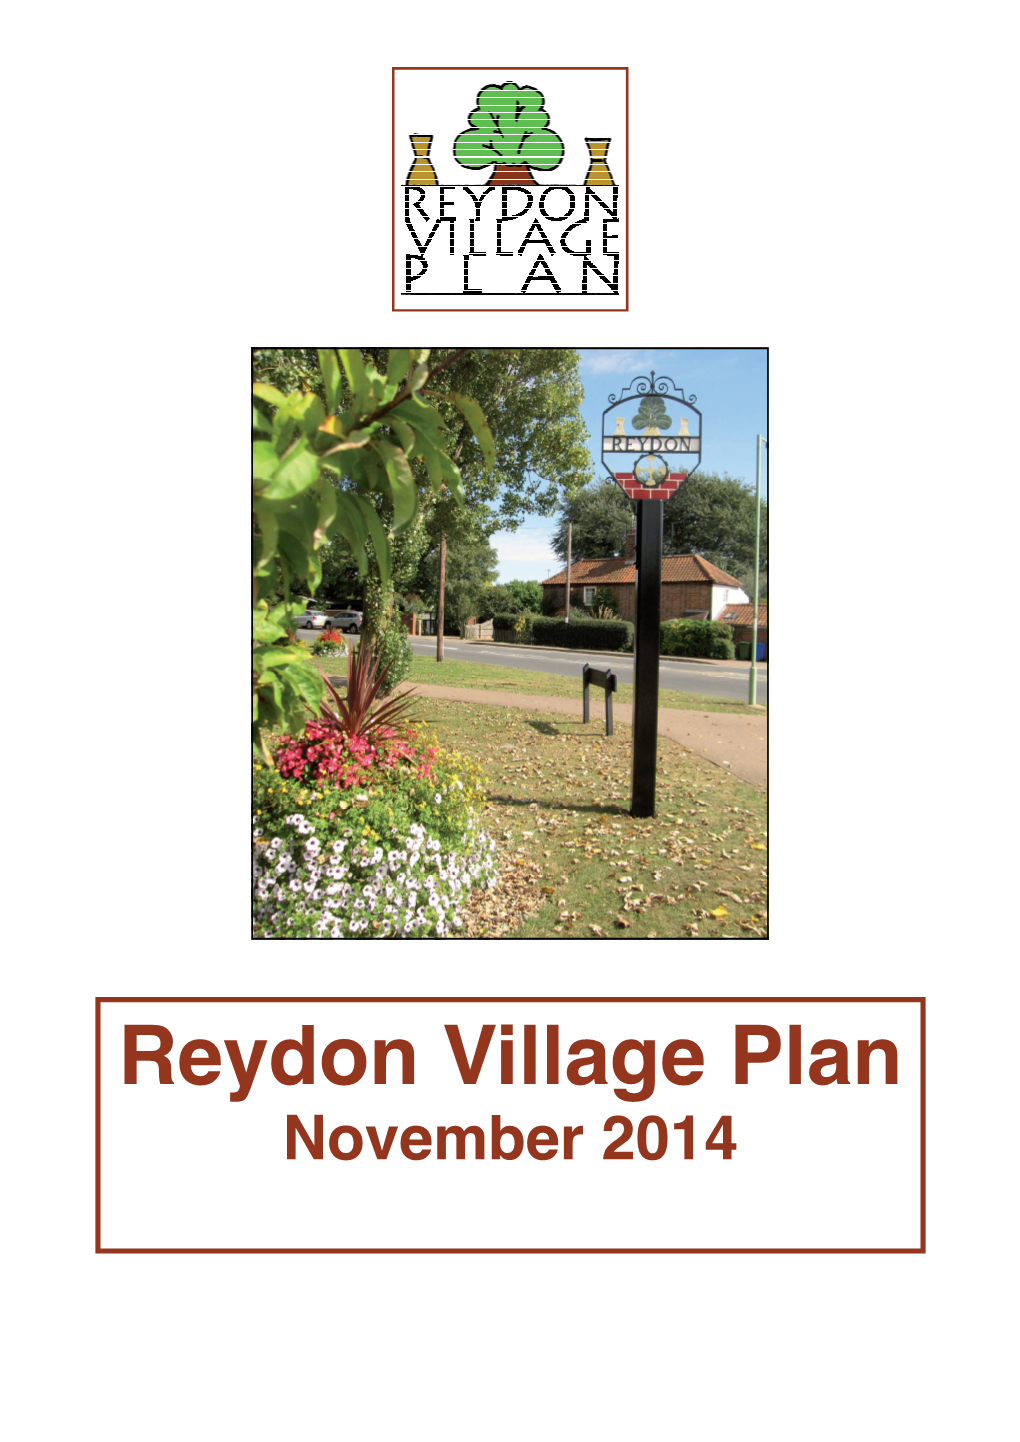 Reydon Village Plan November 2014 Reydon Village Aerial View